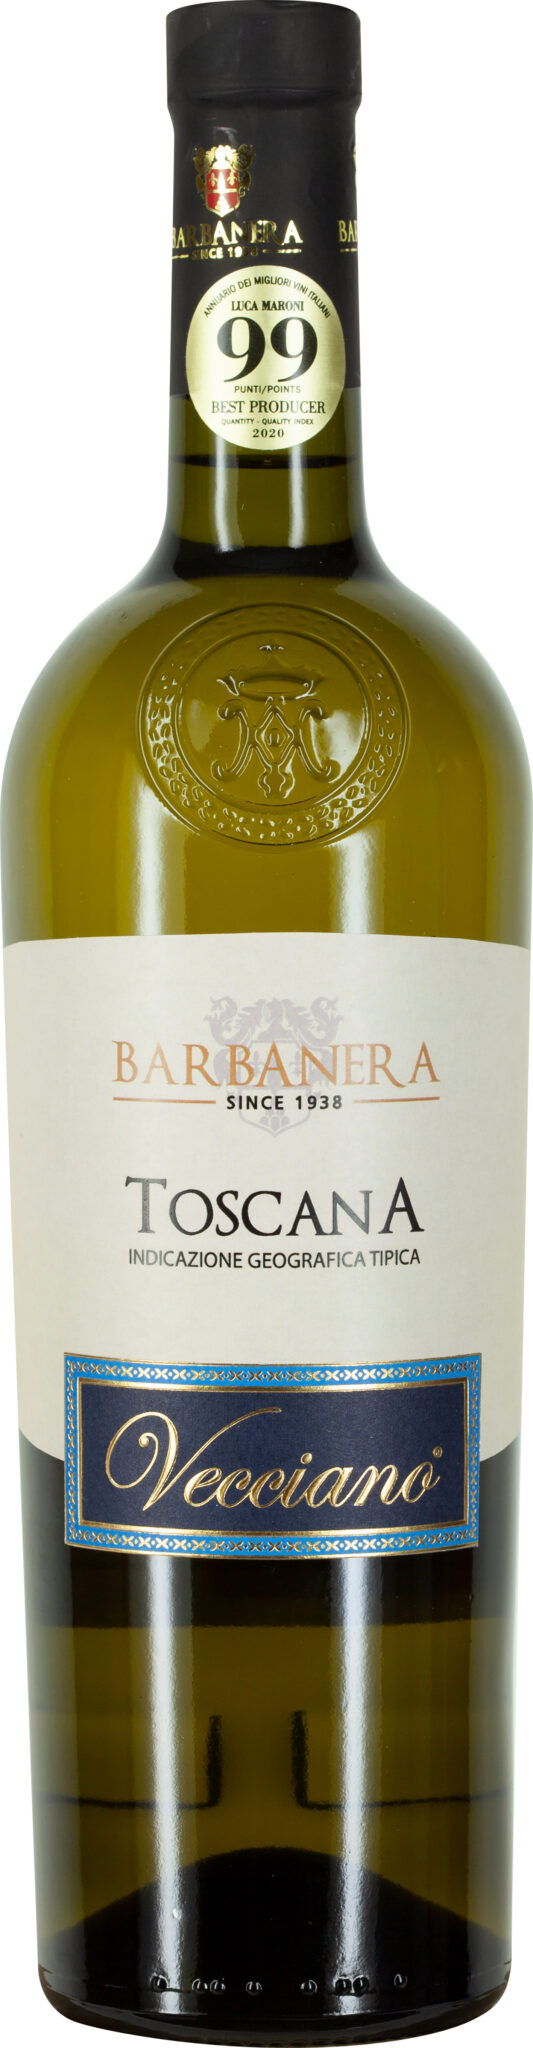 Toscana Bianco Barbanera bestellen Vecciano IGT, Weißwein